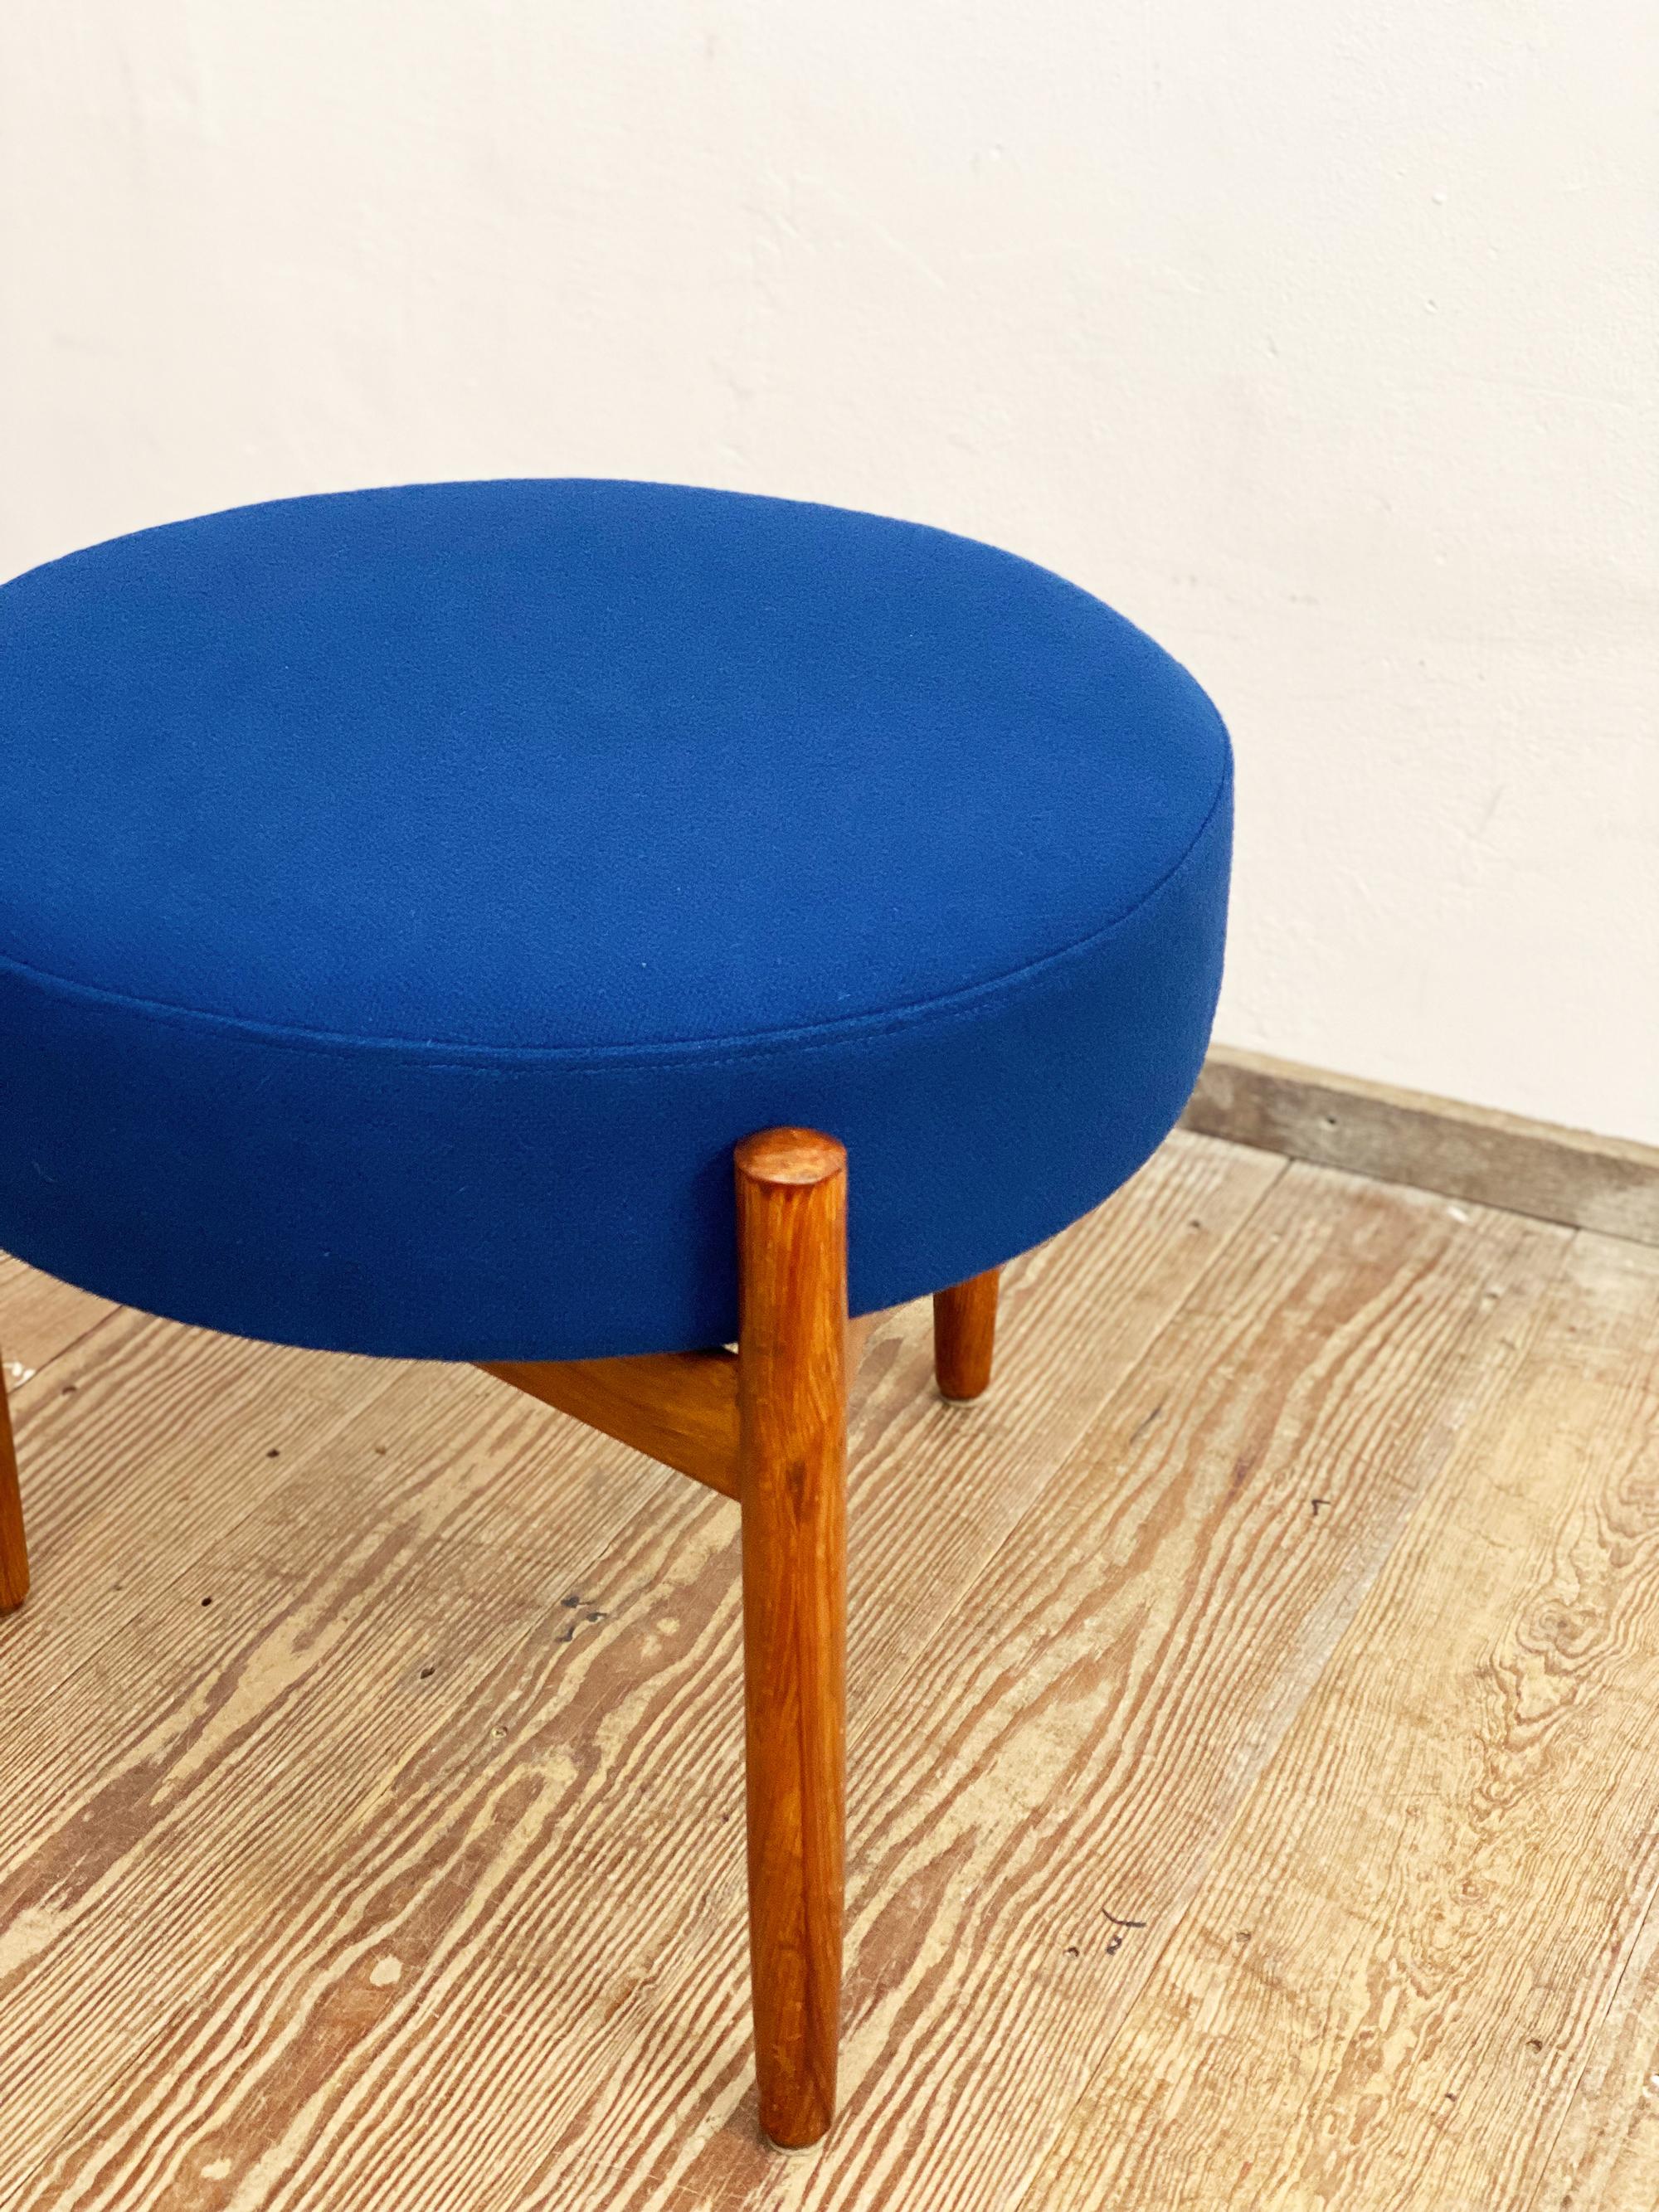 Mid-Century Modern Danish Mid-Century Design Teak Stool or Round Foot Rest with Blue Upholstery